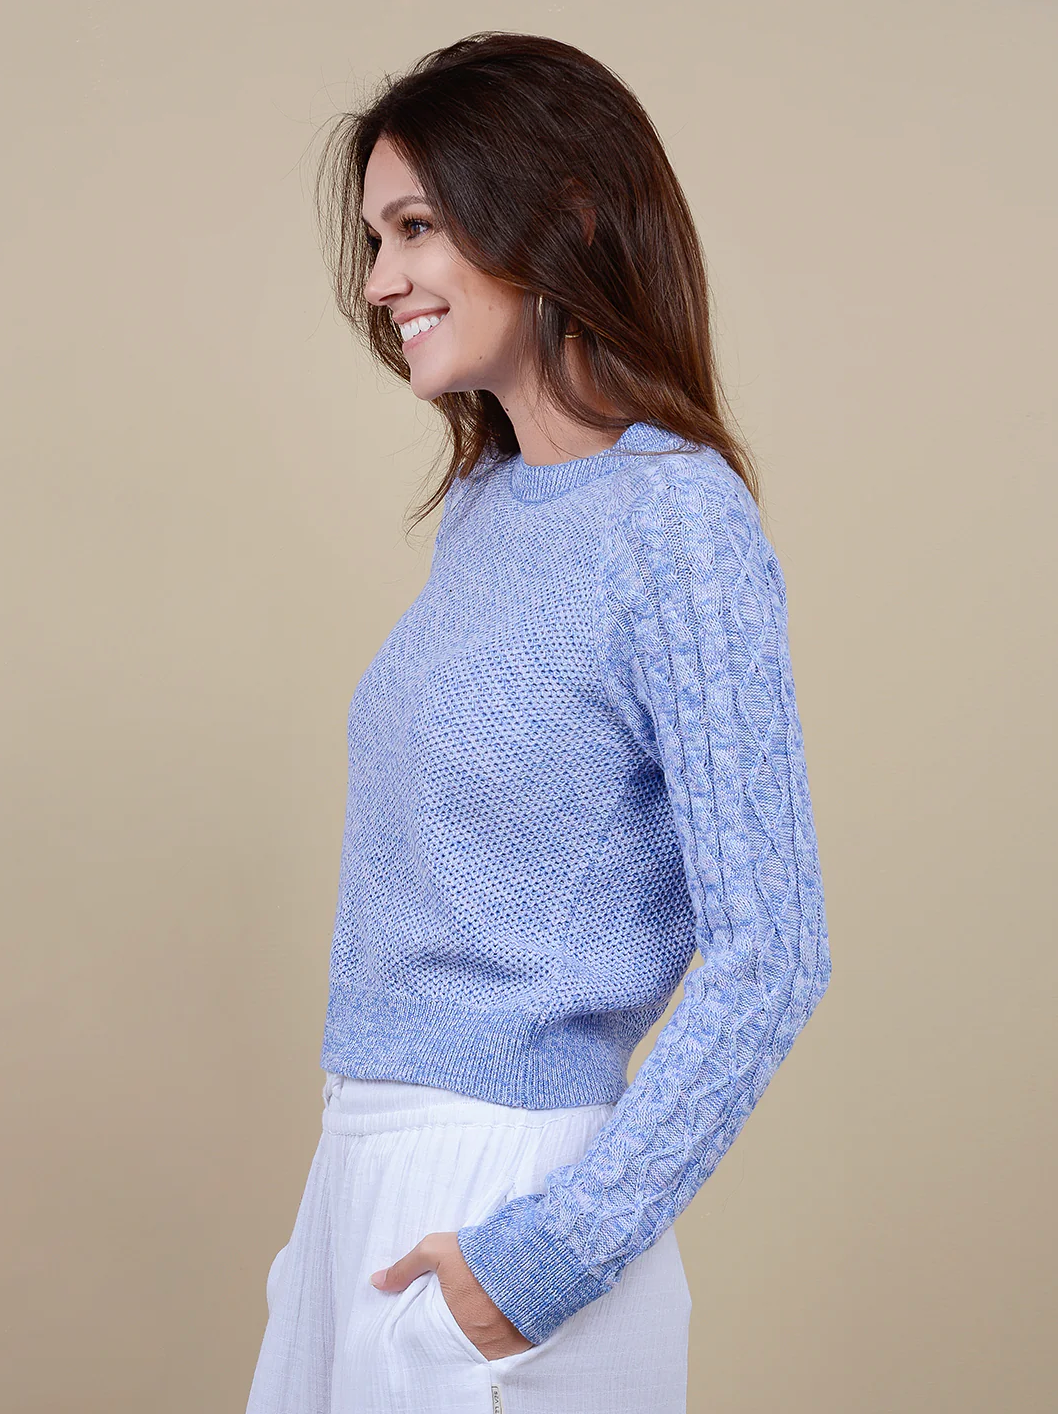 Lorne sweater - blossom